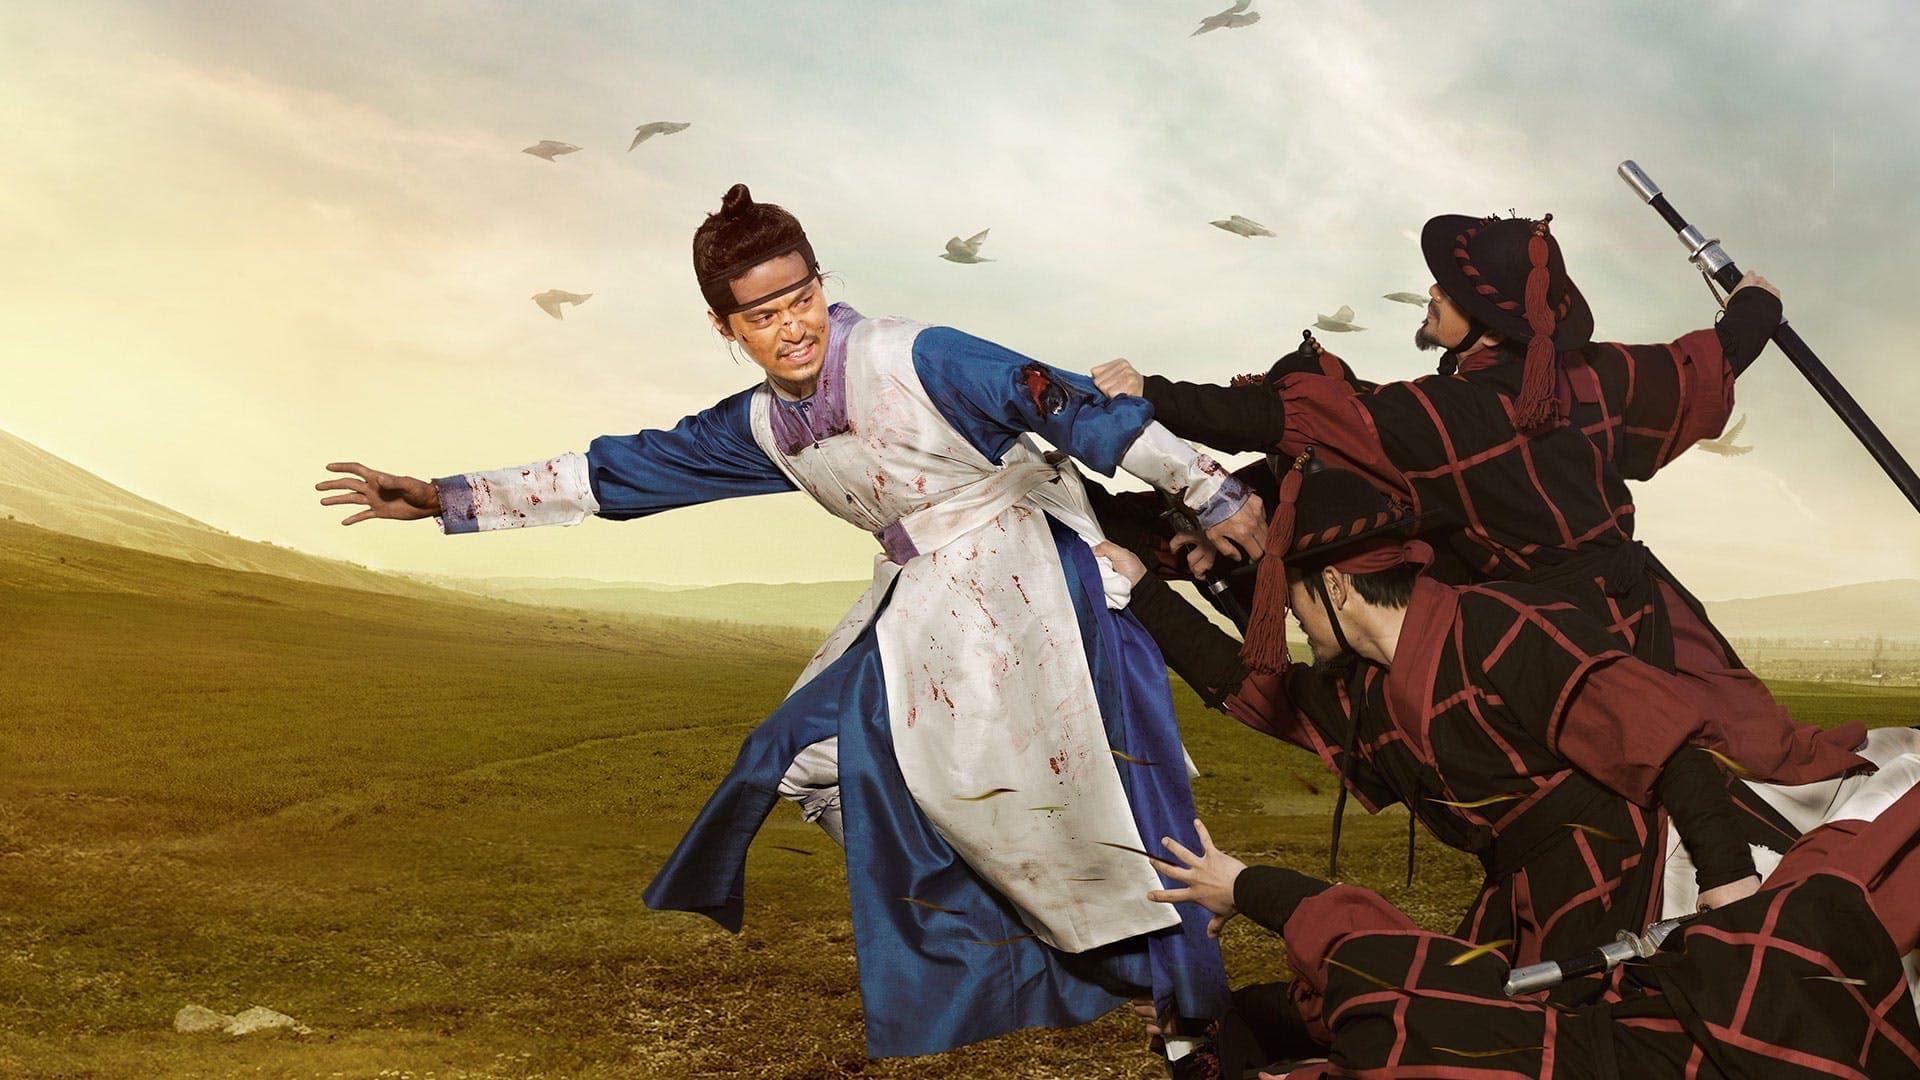 The Fugitive of Joseon backdrop